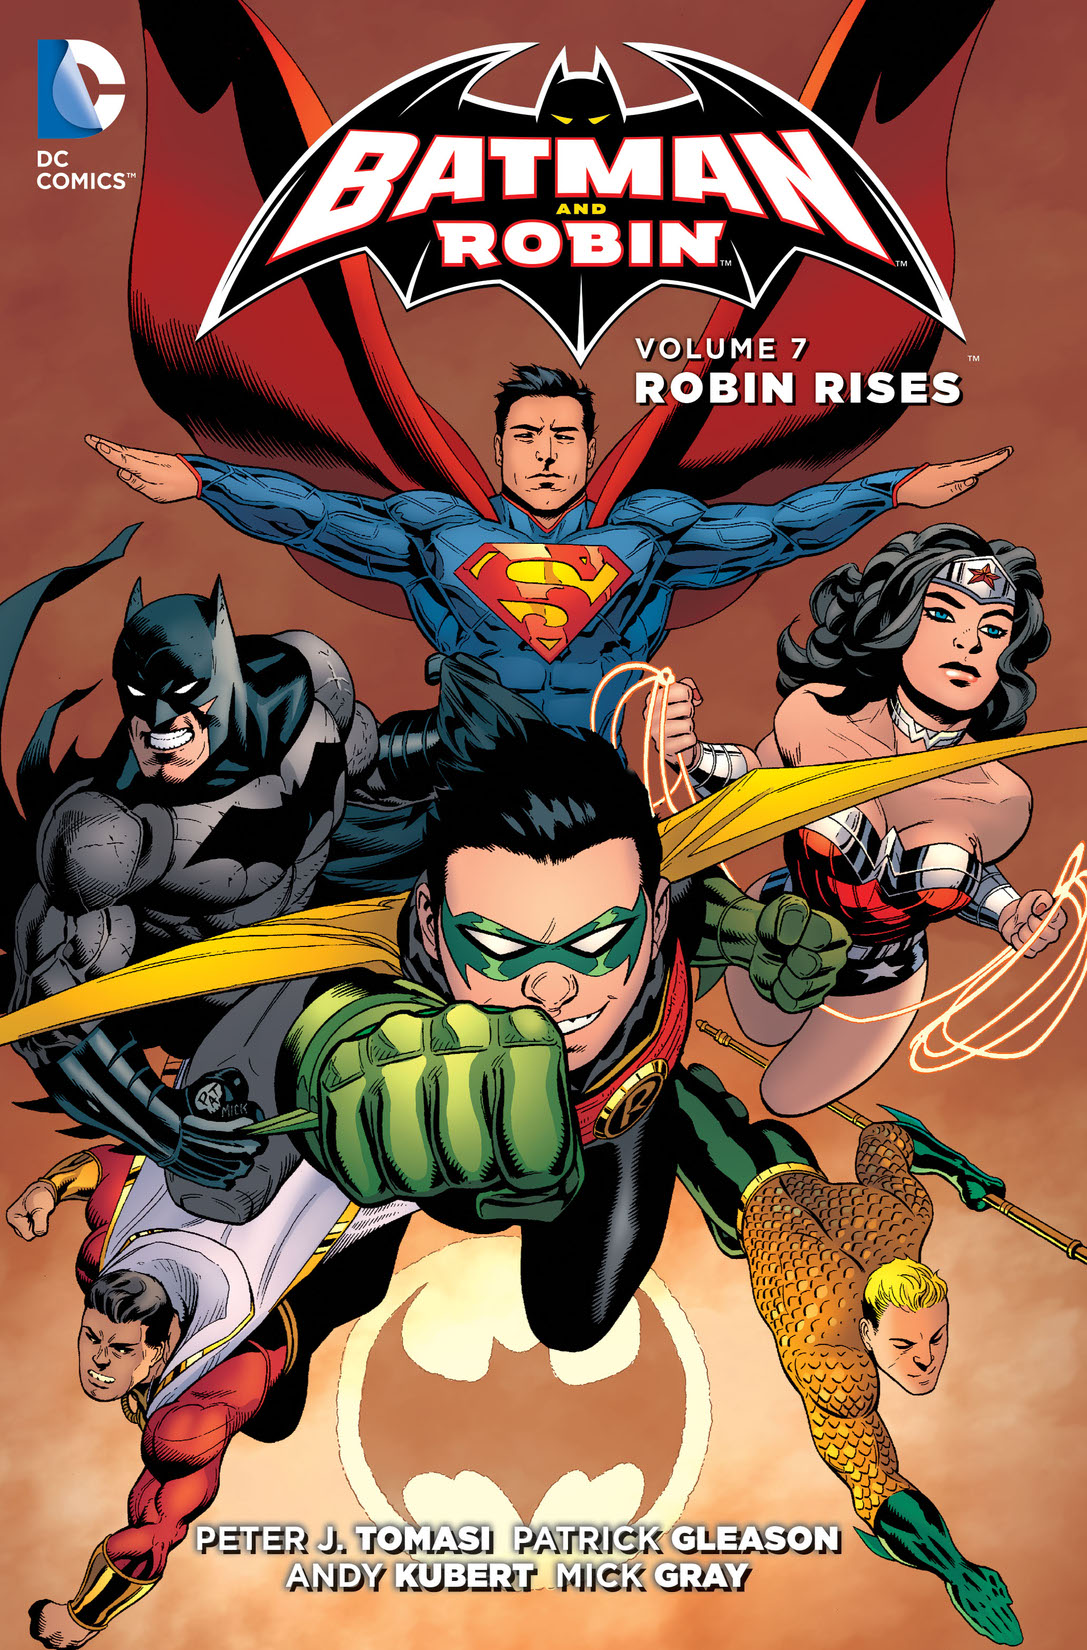 Batman and Robin Vol. 7: Robin Rises preview images